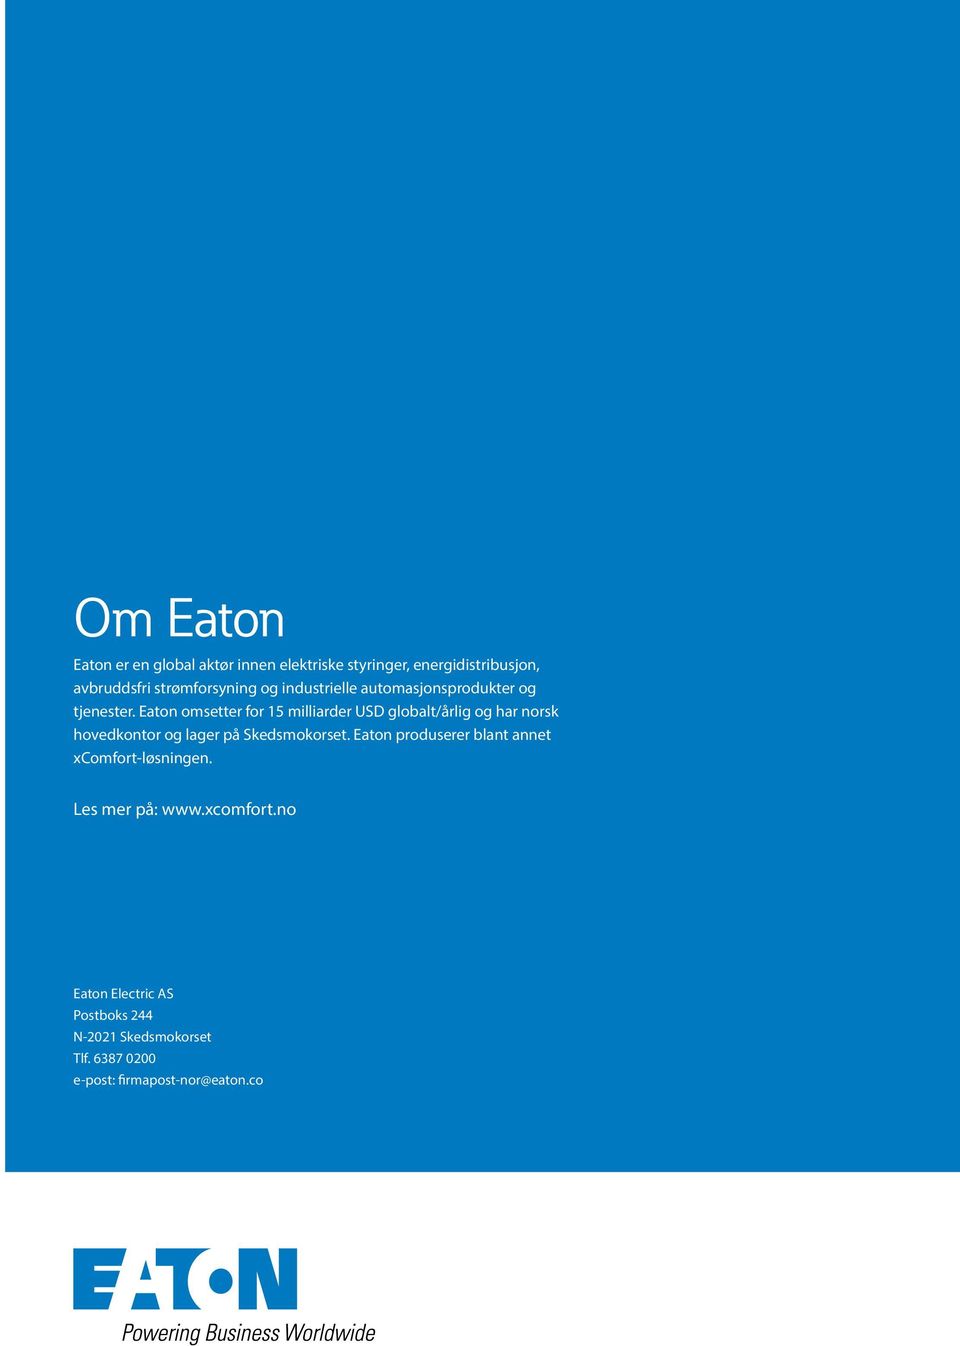 Eaton omsetter for 15 milliarder USD globalt/årlig og har norsk hovedkontor og lager på Skedsmokorset.